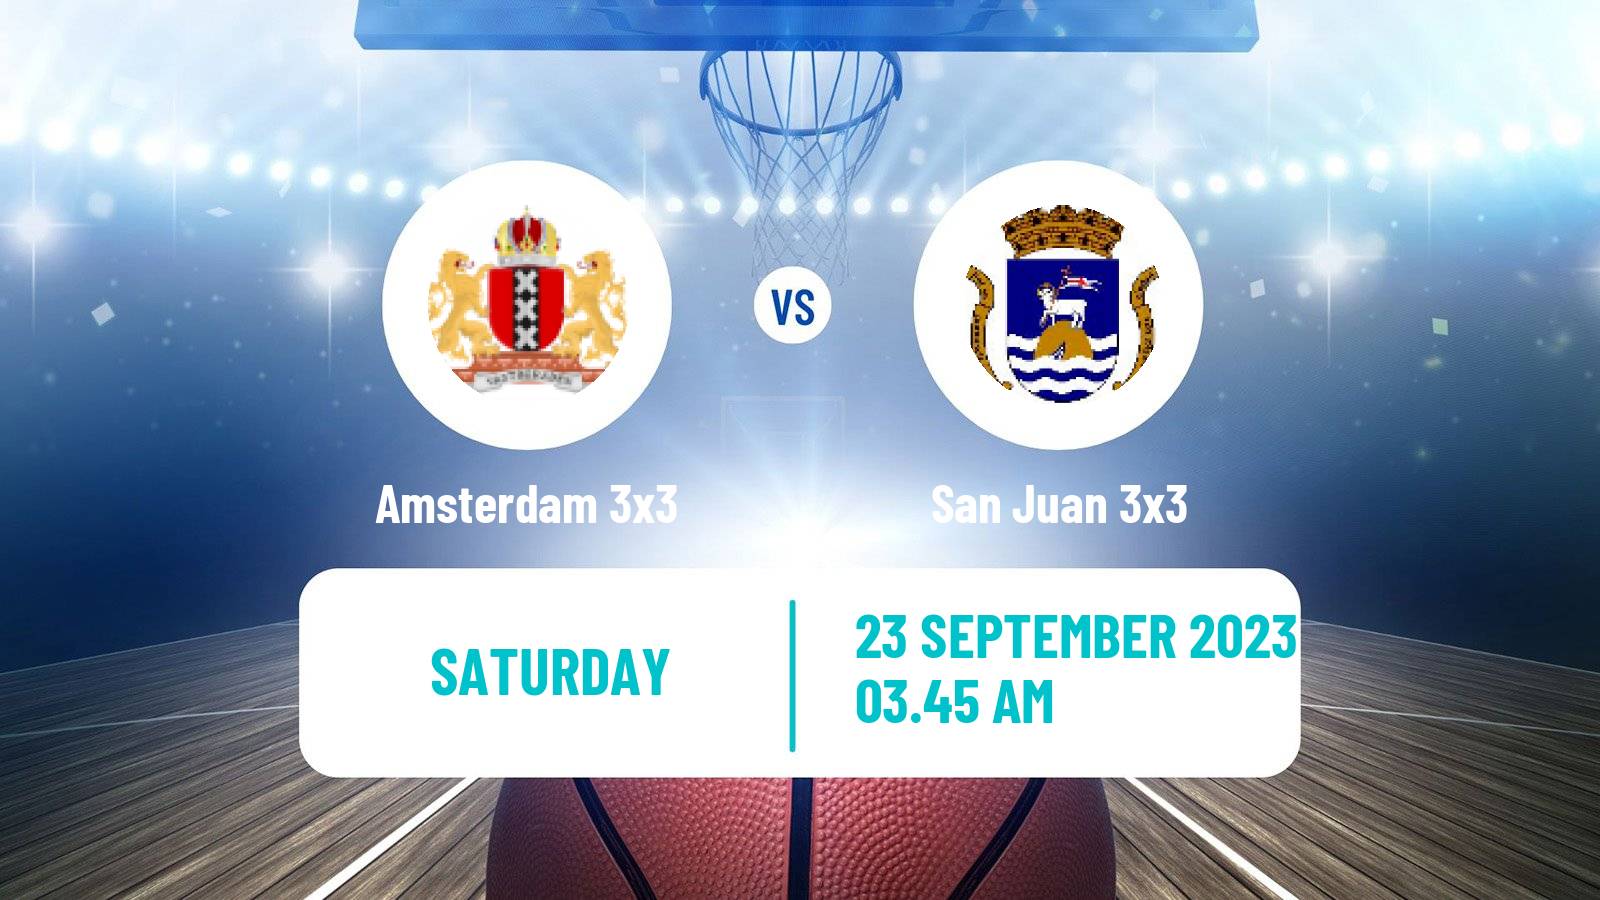 Basketball World Tour Сebu 3x3 Amsterdam 3x3 - San Juan 3x3